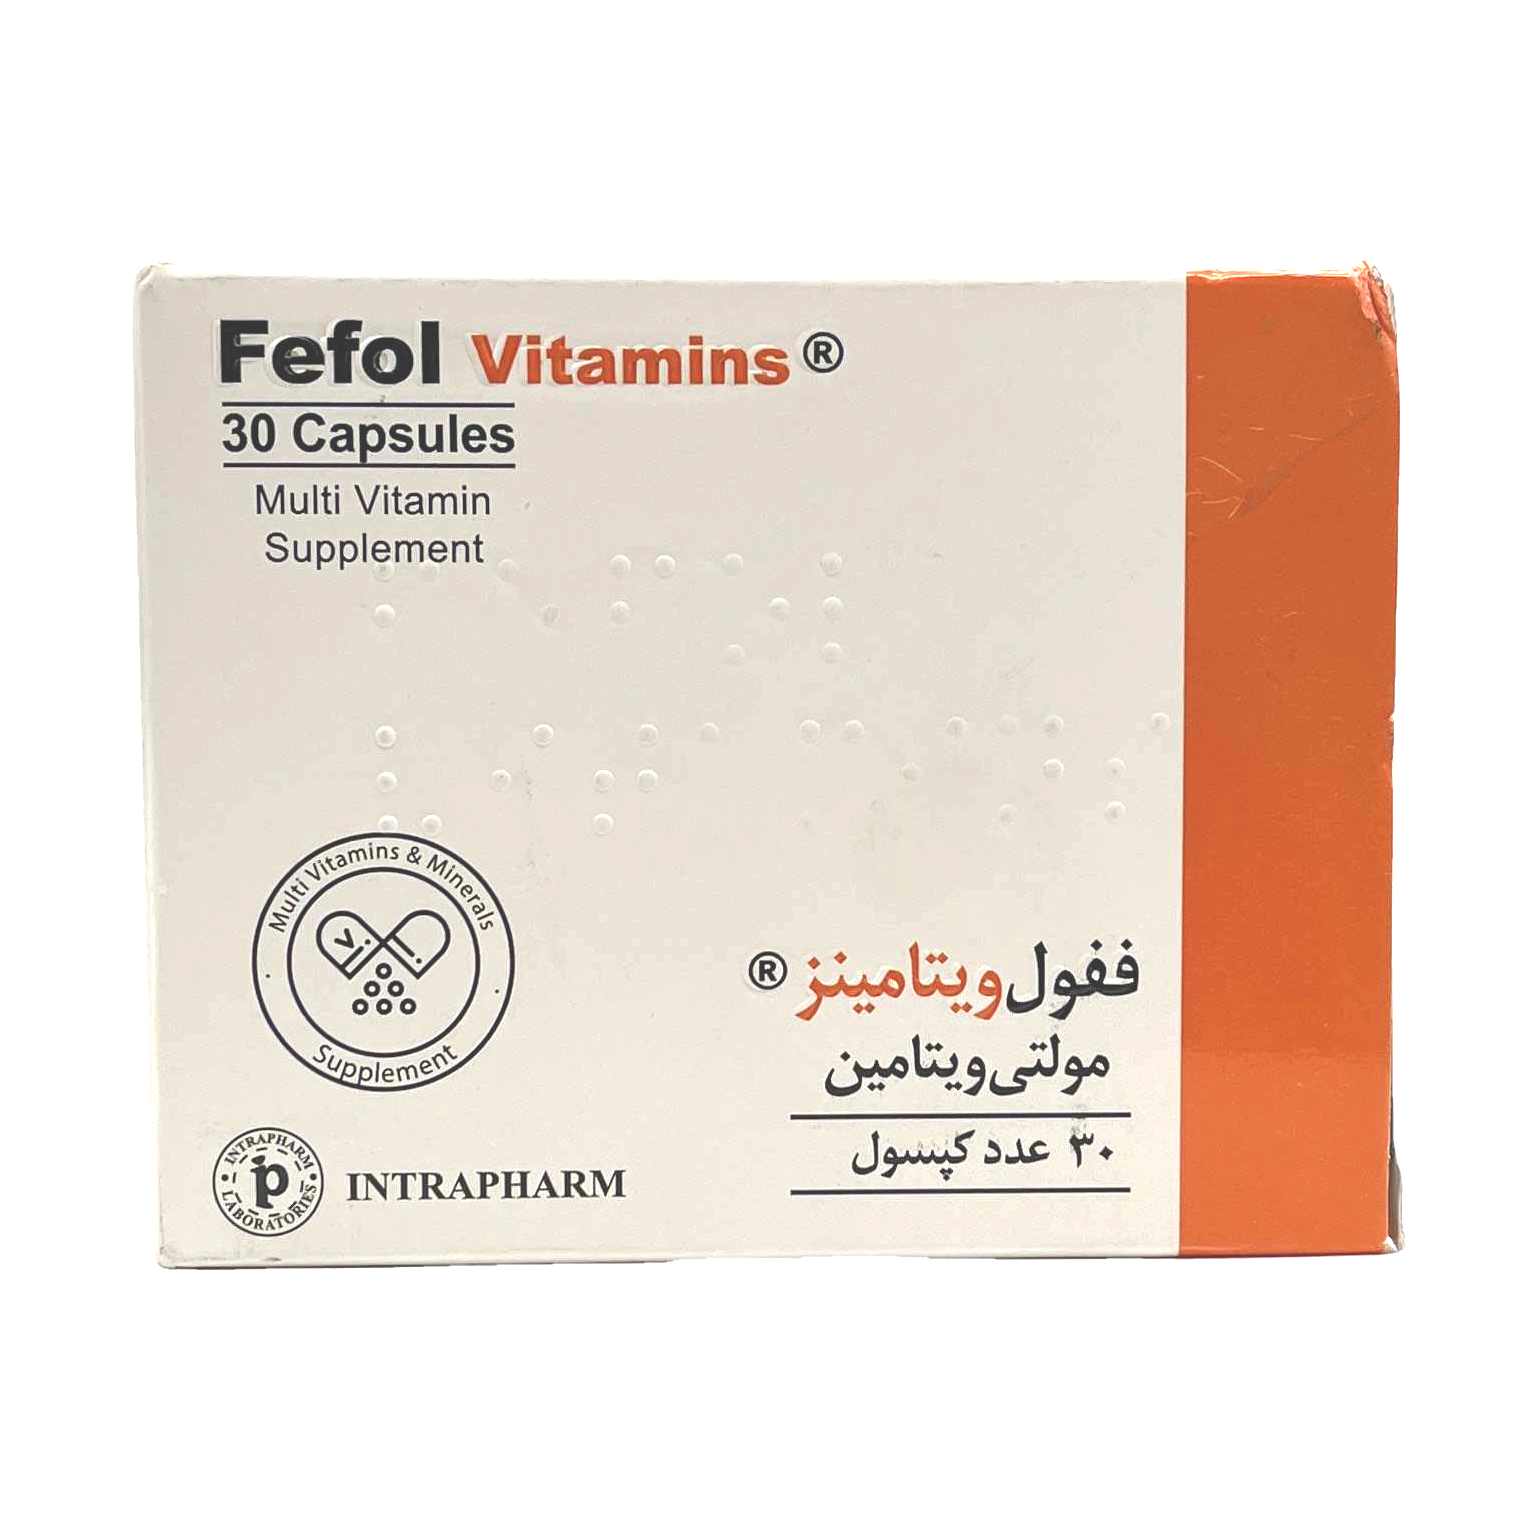 کپسول ففول ویتامینز اینترافارم Intrapharm Fefol Vitamins